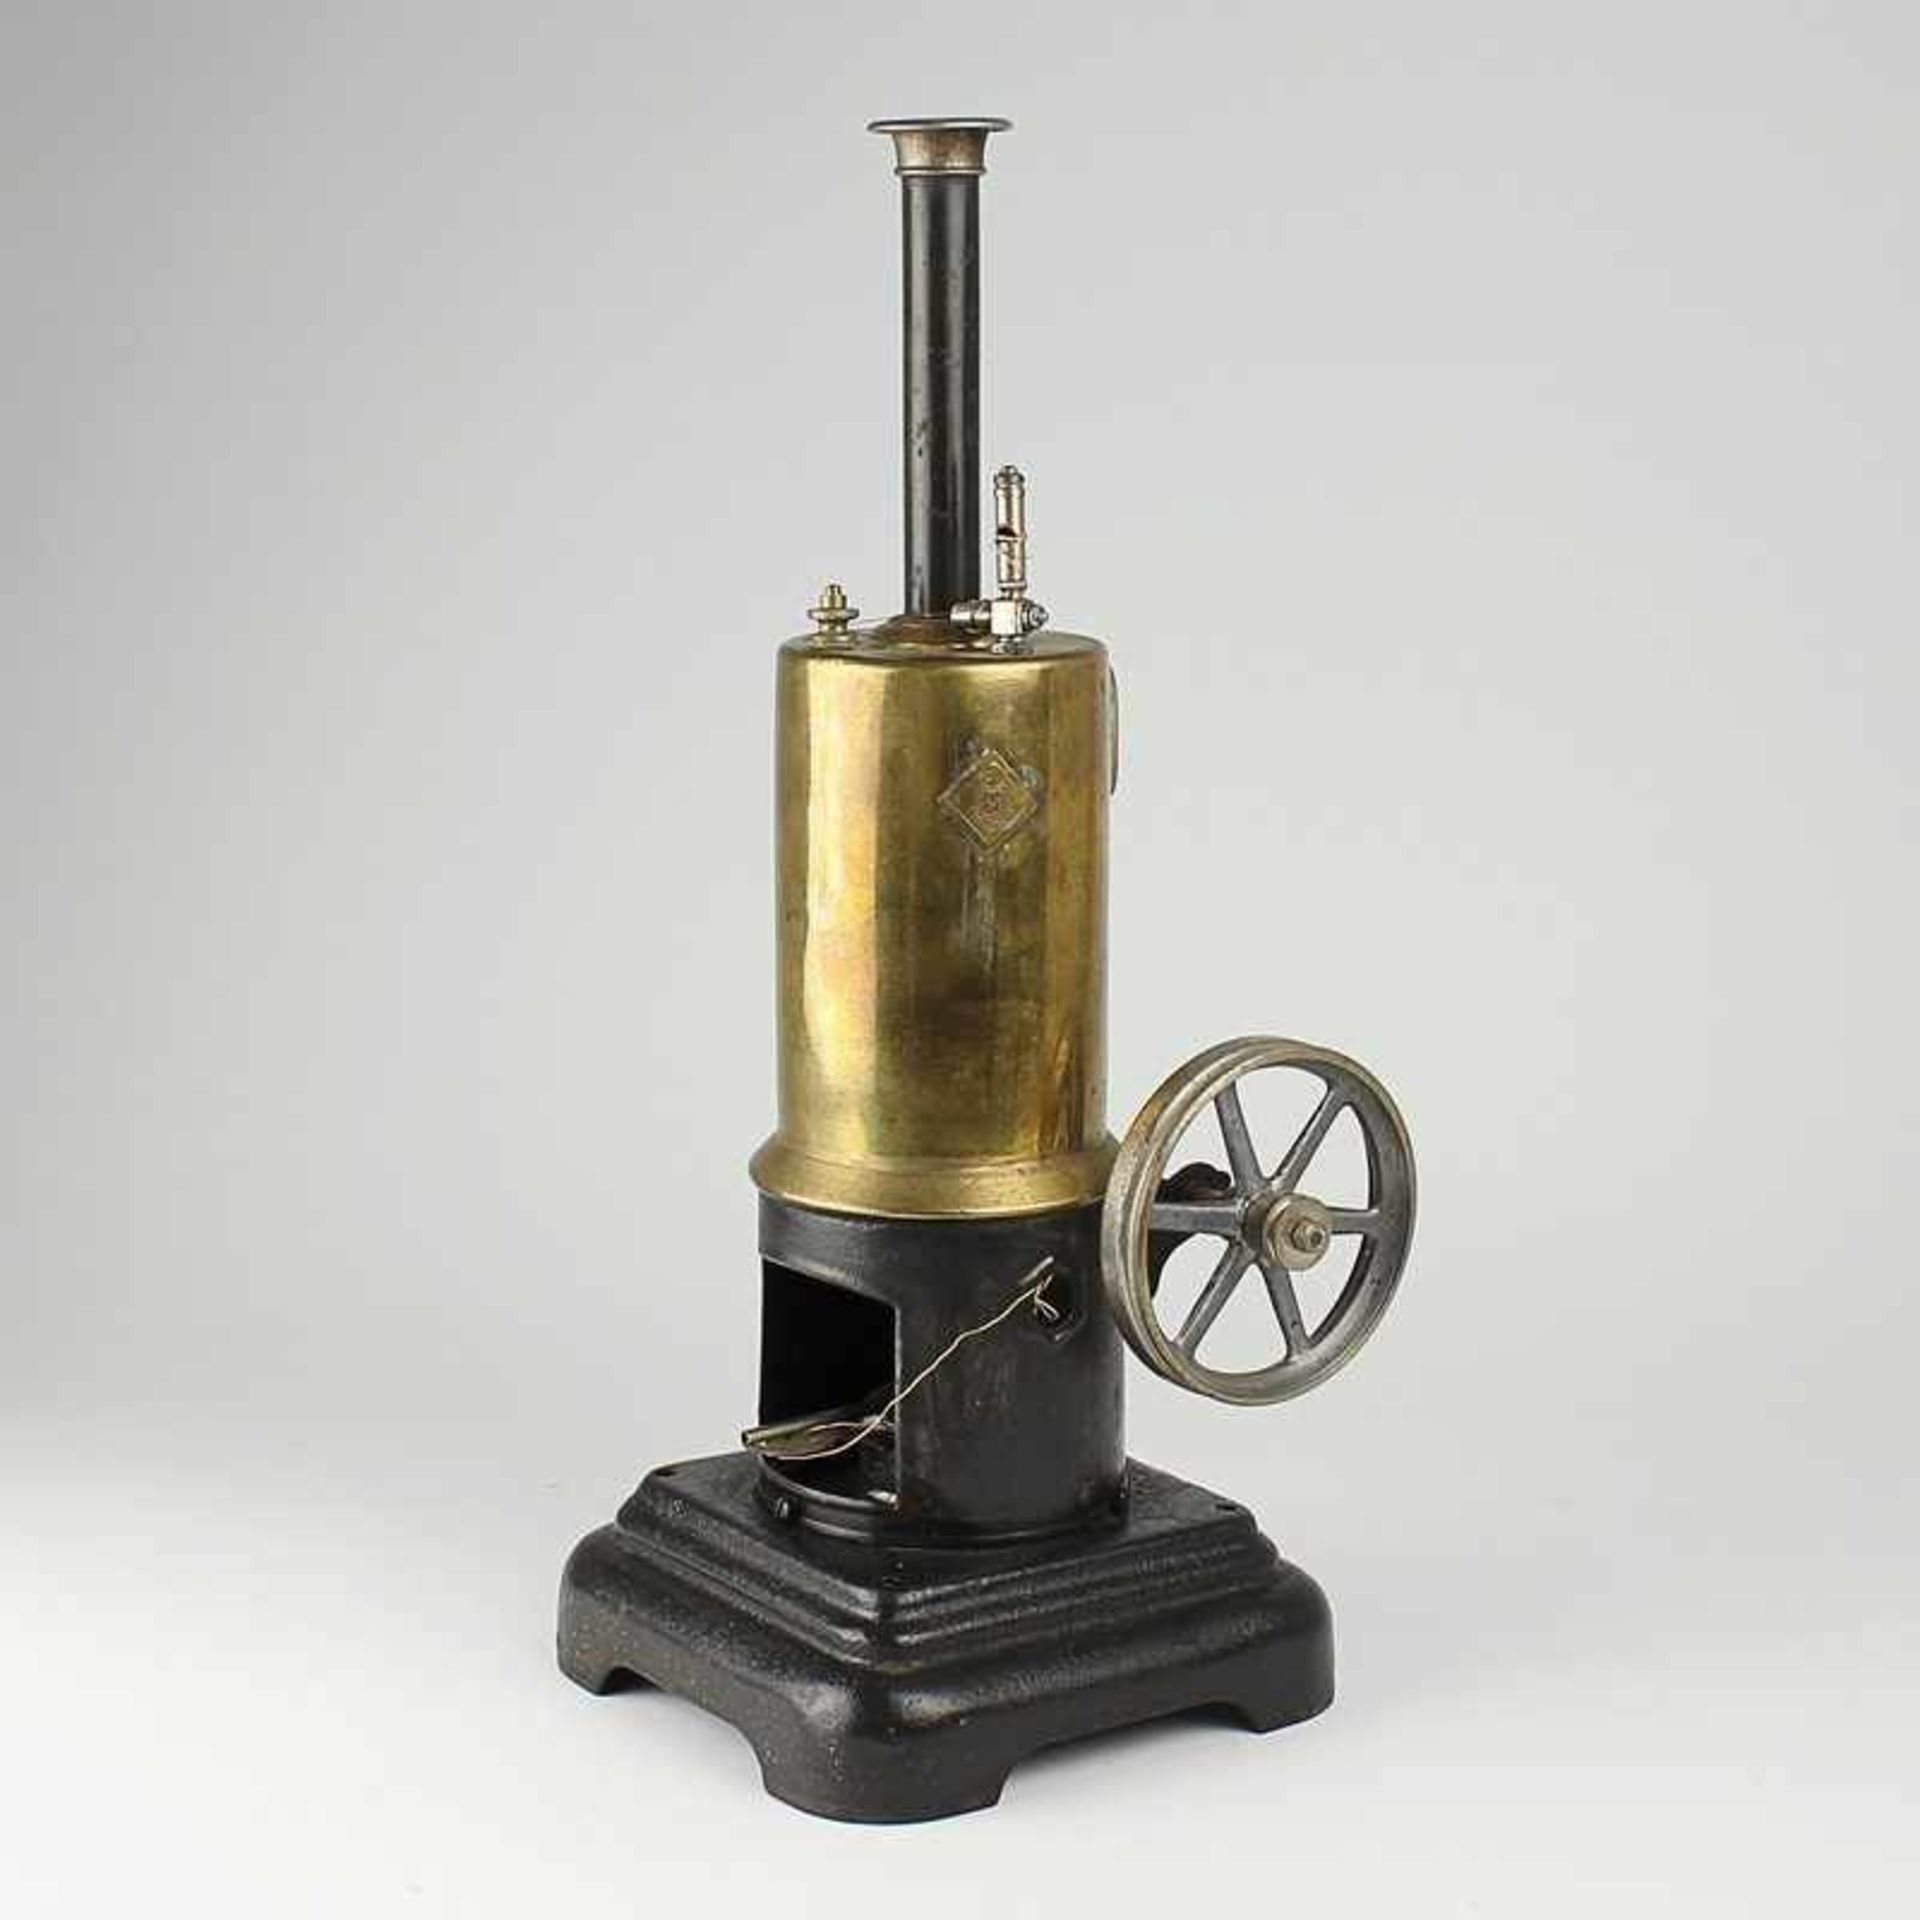 Märklin - Dampfmaschine stehender Messingkessel, 4105, Modell 6 1/2, um 1926, gem., Brenner, Schlot,